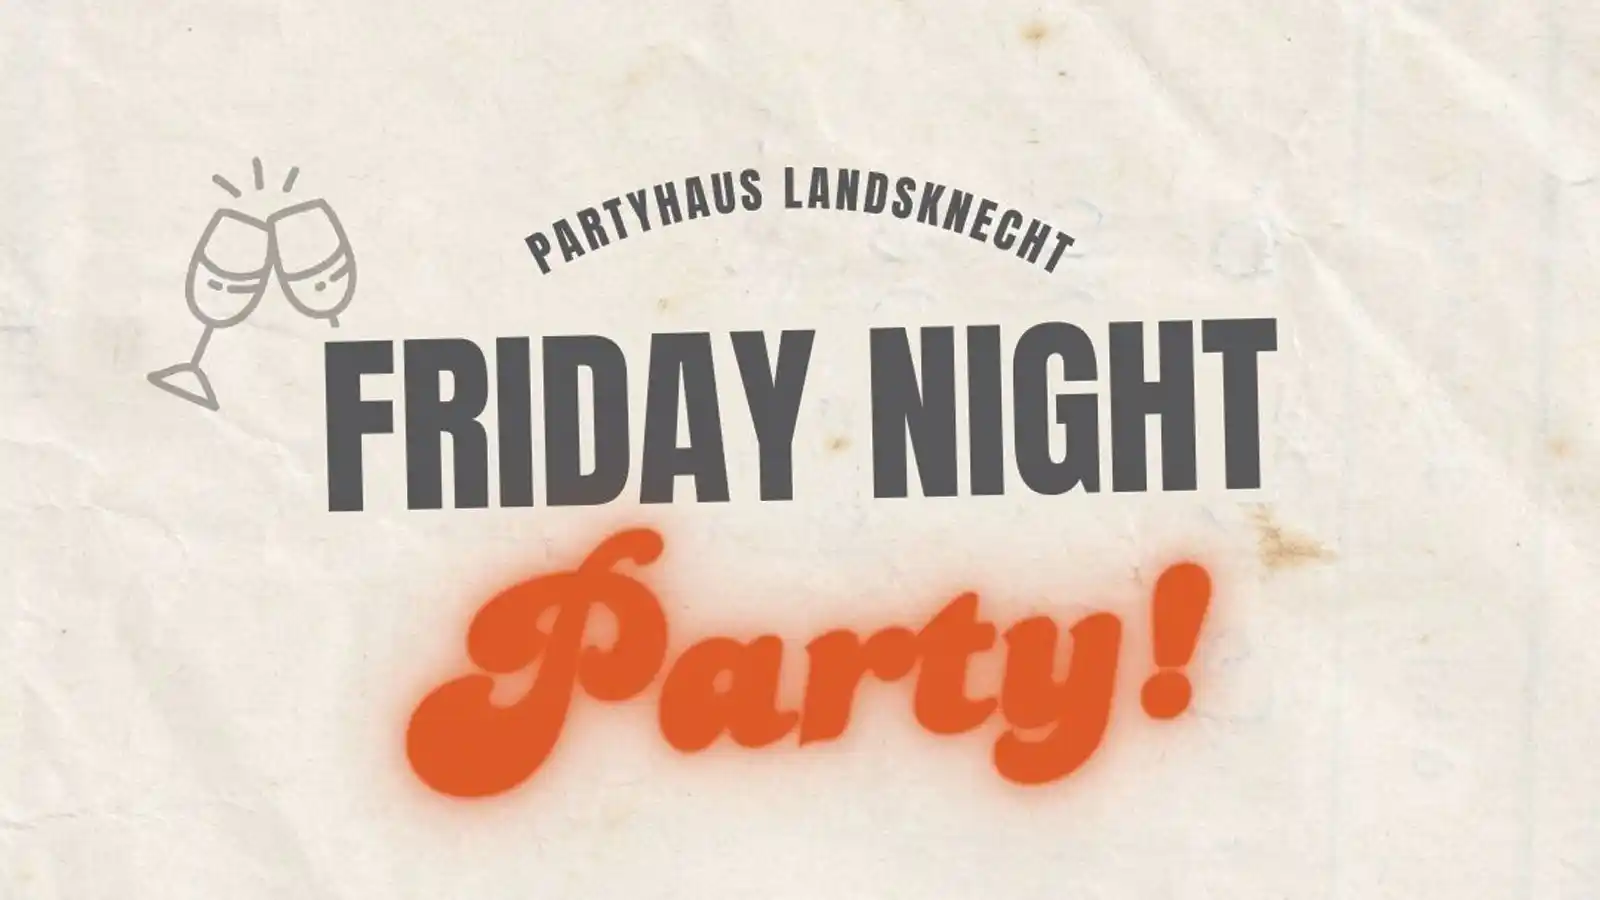 friday night party partyhaus landsknecht